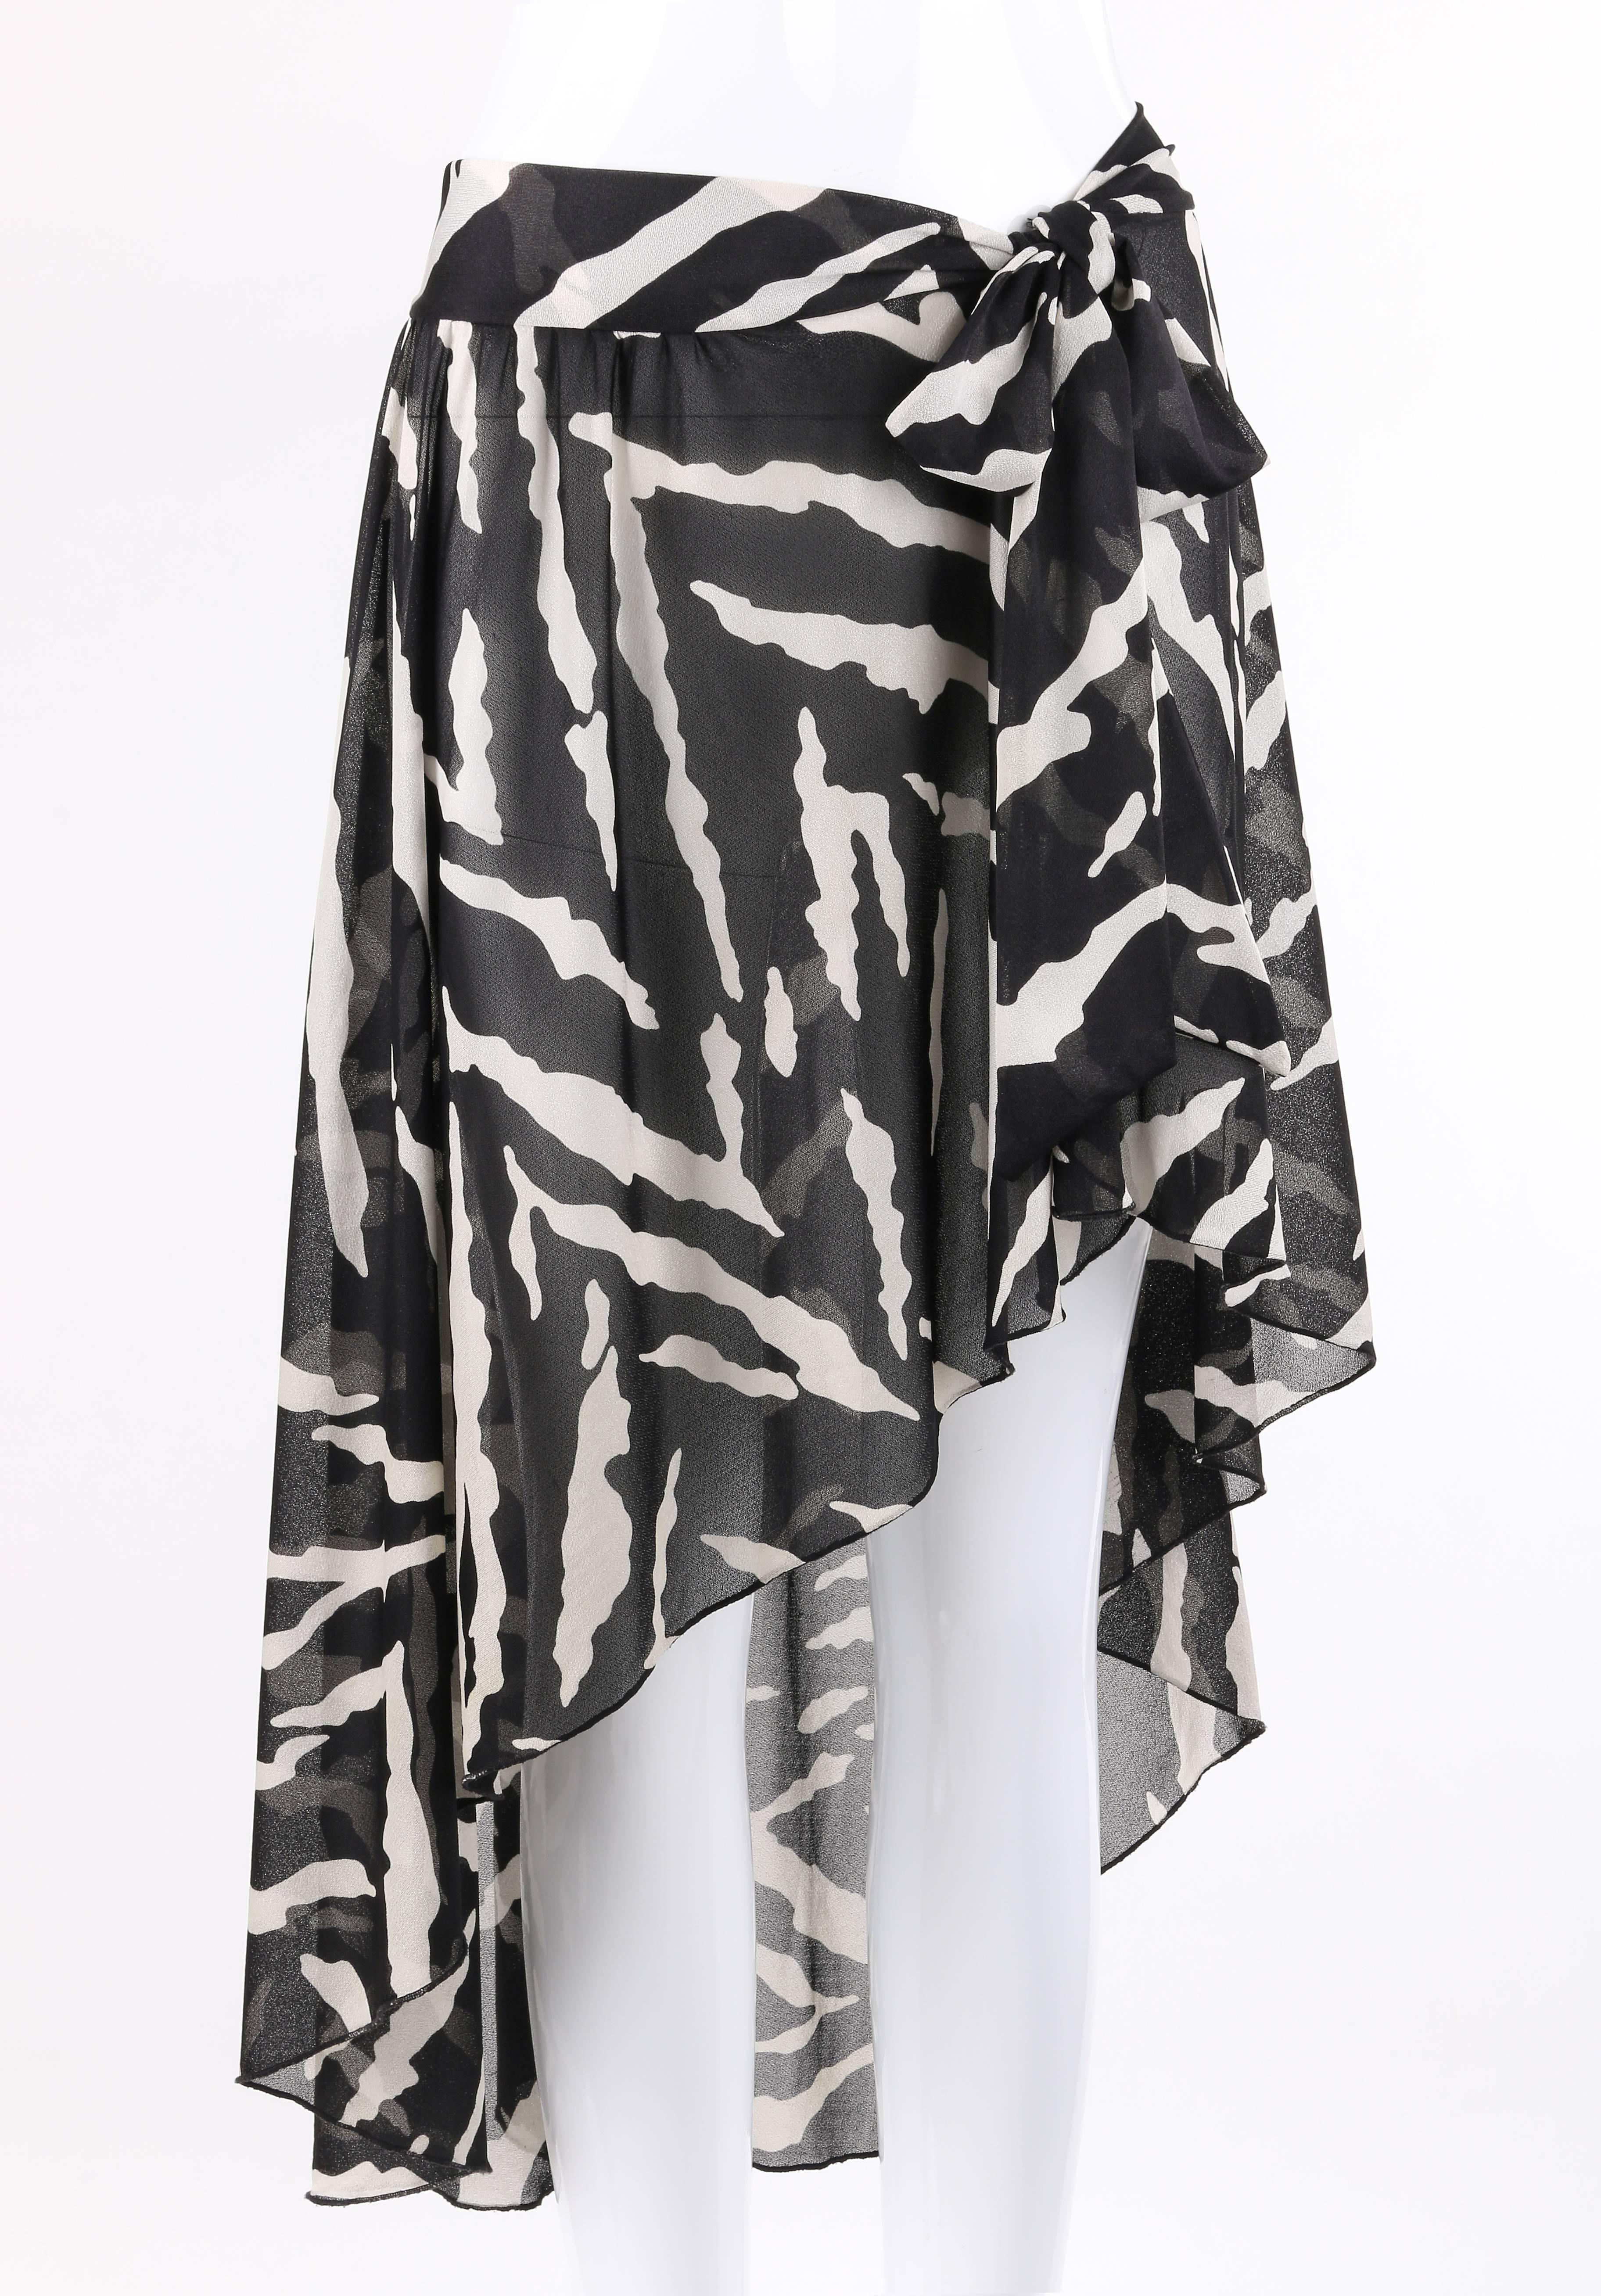 Vintage Oscar de la Renta Swimwear c.1980's black and white zebra print beachwear cover up. Bias cut. Banded tie waist. Asymmetrical hi-low hem. Lightly gathered skirt. Marked Fabric Content: 